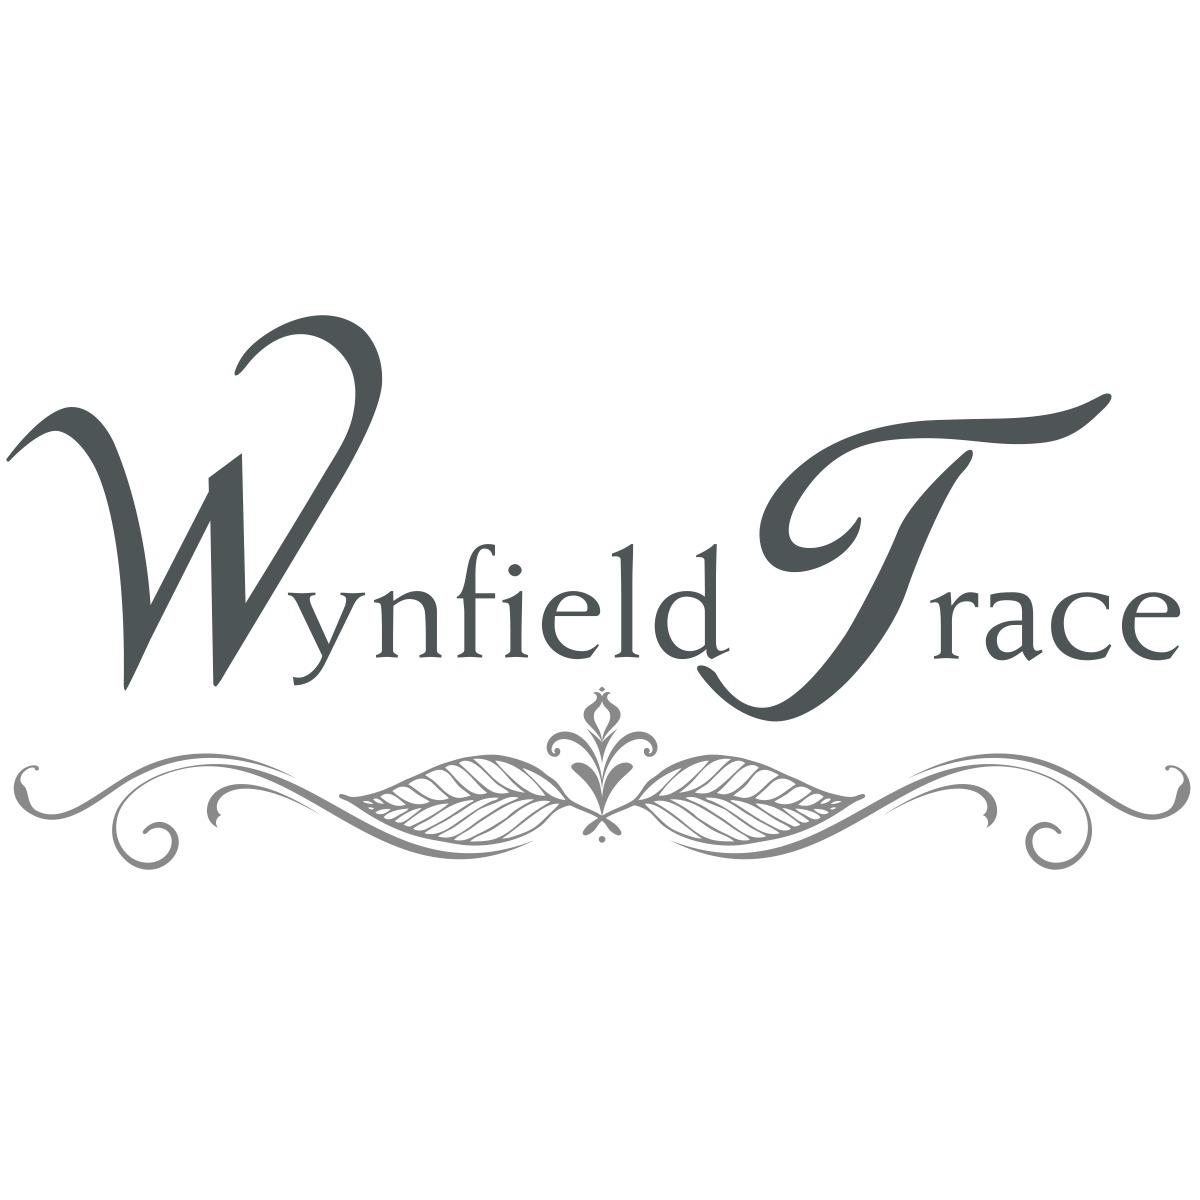 Wynfield Trace - Peachtree Corners, GA 30092 - (770)263-6631 | ShowMeLocal.com